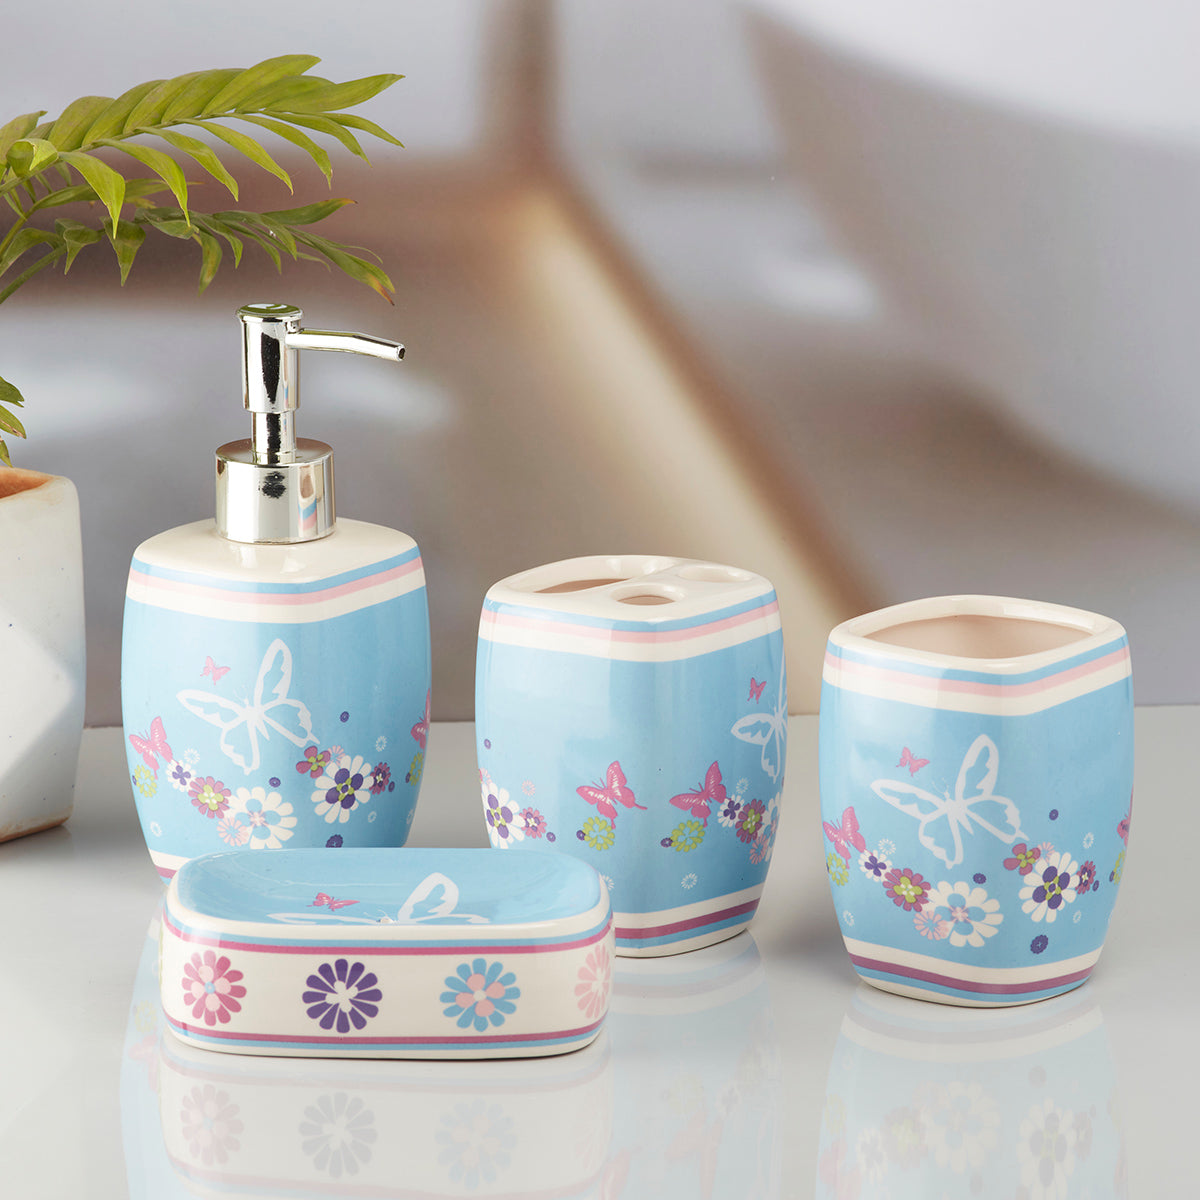 Ceramic Bathroom Accessories Set of 4 Bath Set with Soap Dispenser (10215)